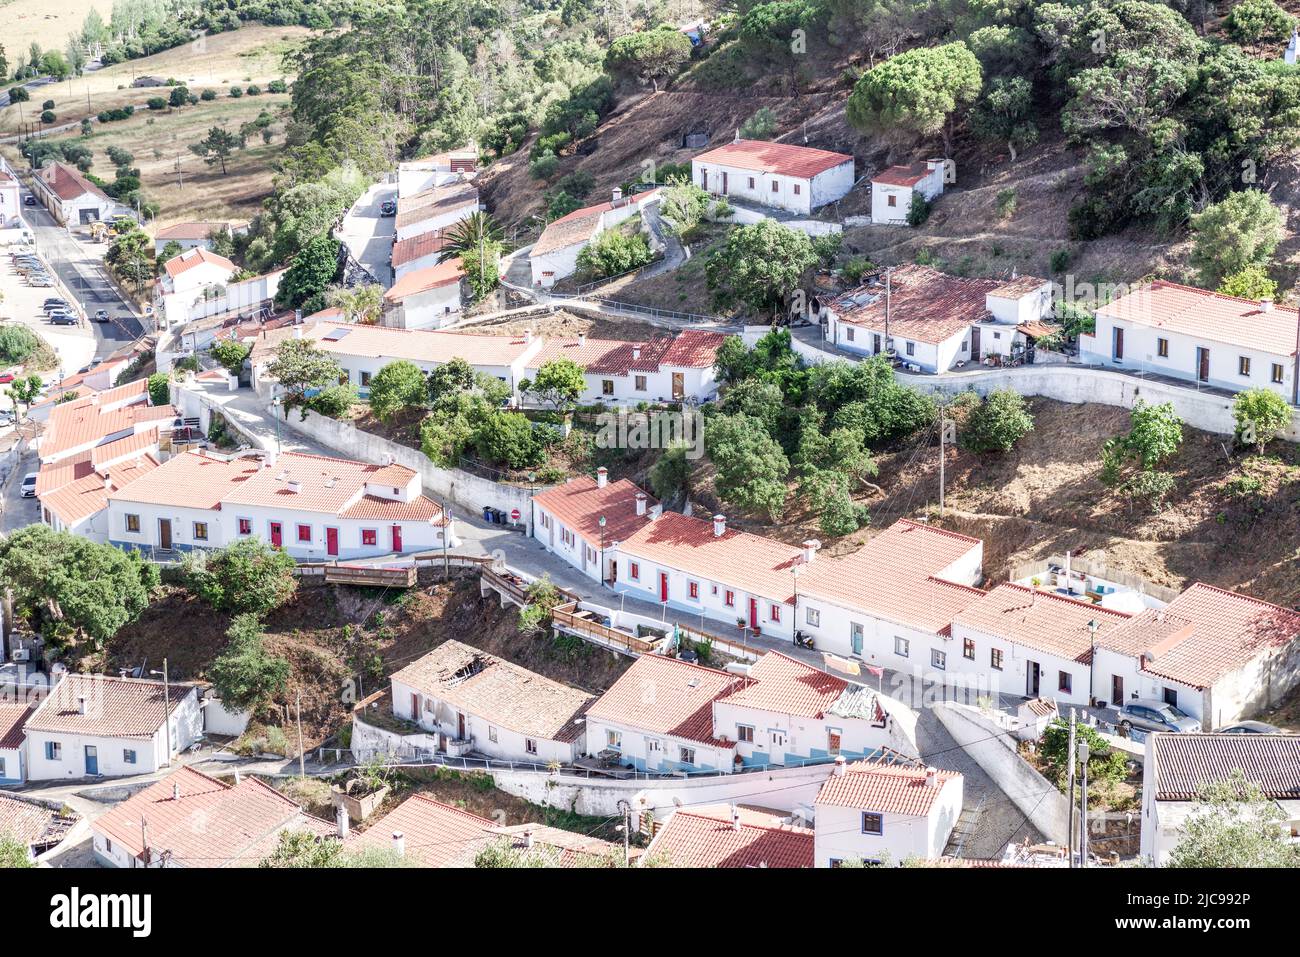 View of Aljezut town from Aljezur castle - Algarve, Portugal Stock Photo